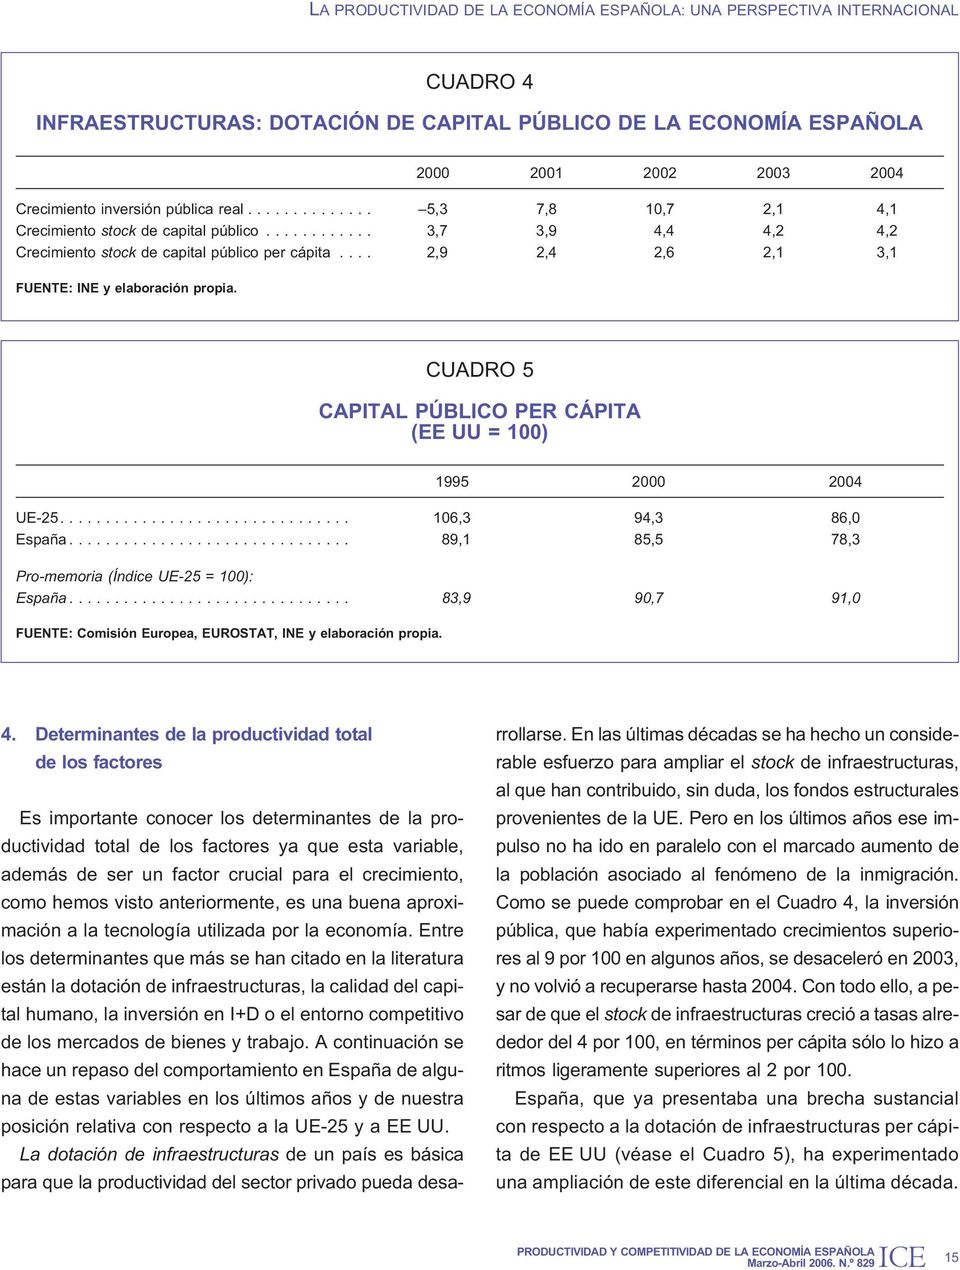 CUADRO 5 CAPITAL PÚBLICO PER CÁPITA (EE UU = 100) 1995 2000 2004 UE-25.... 106,3 94,3 86,0 España... 89,1 85,5 78,3 Pro-memoria (Índice UE-25 = 100): España.